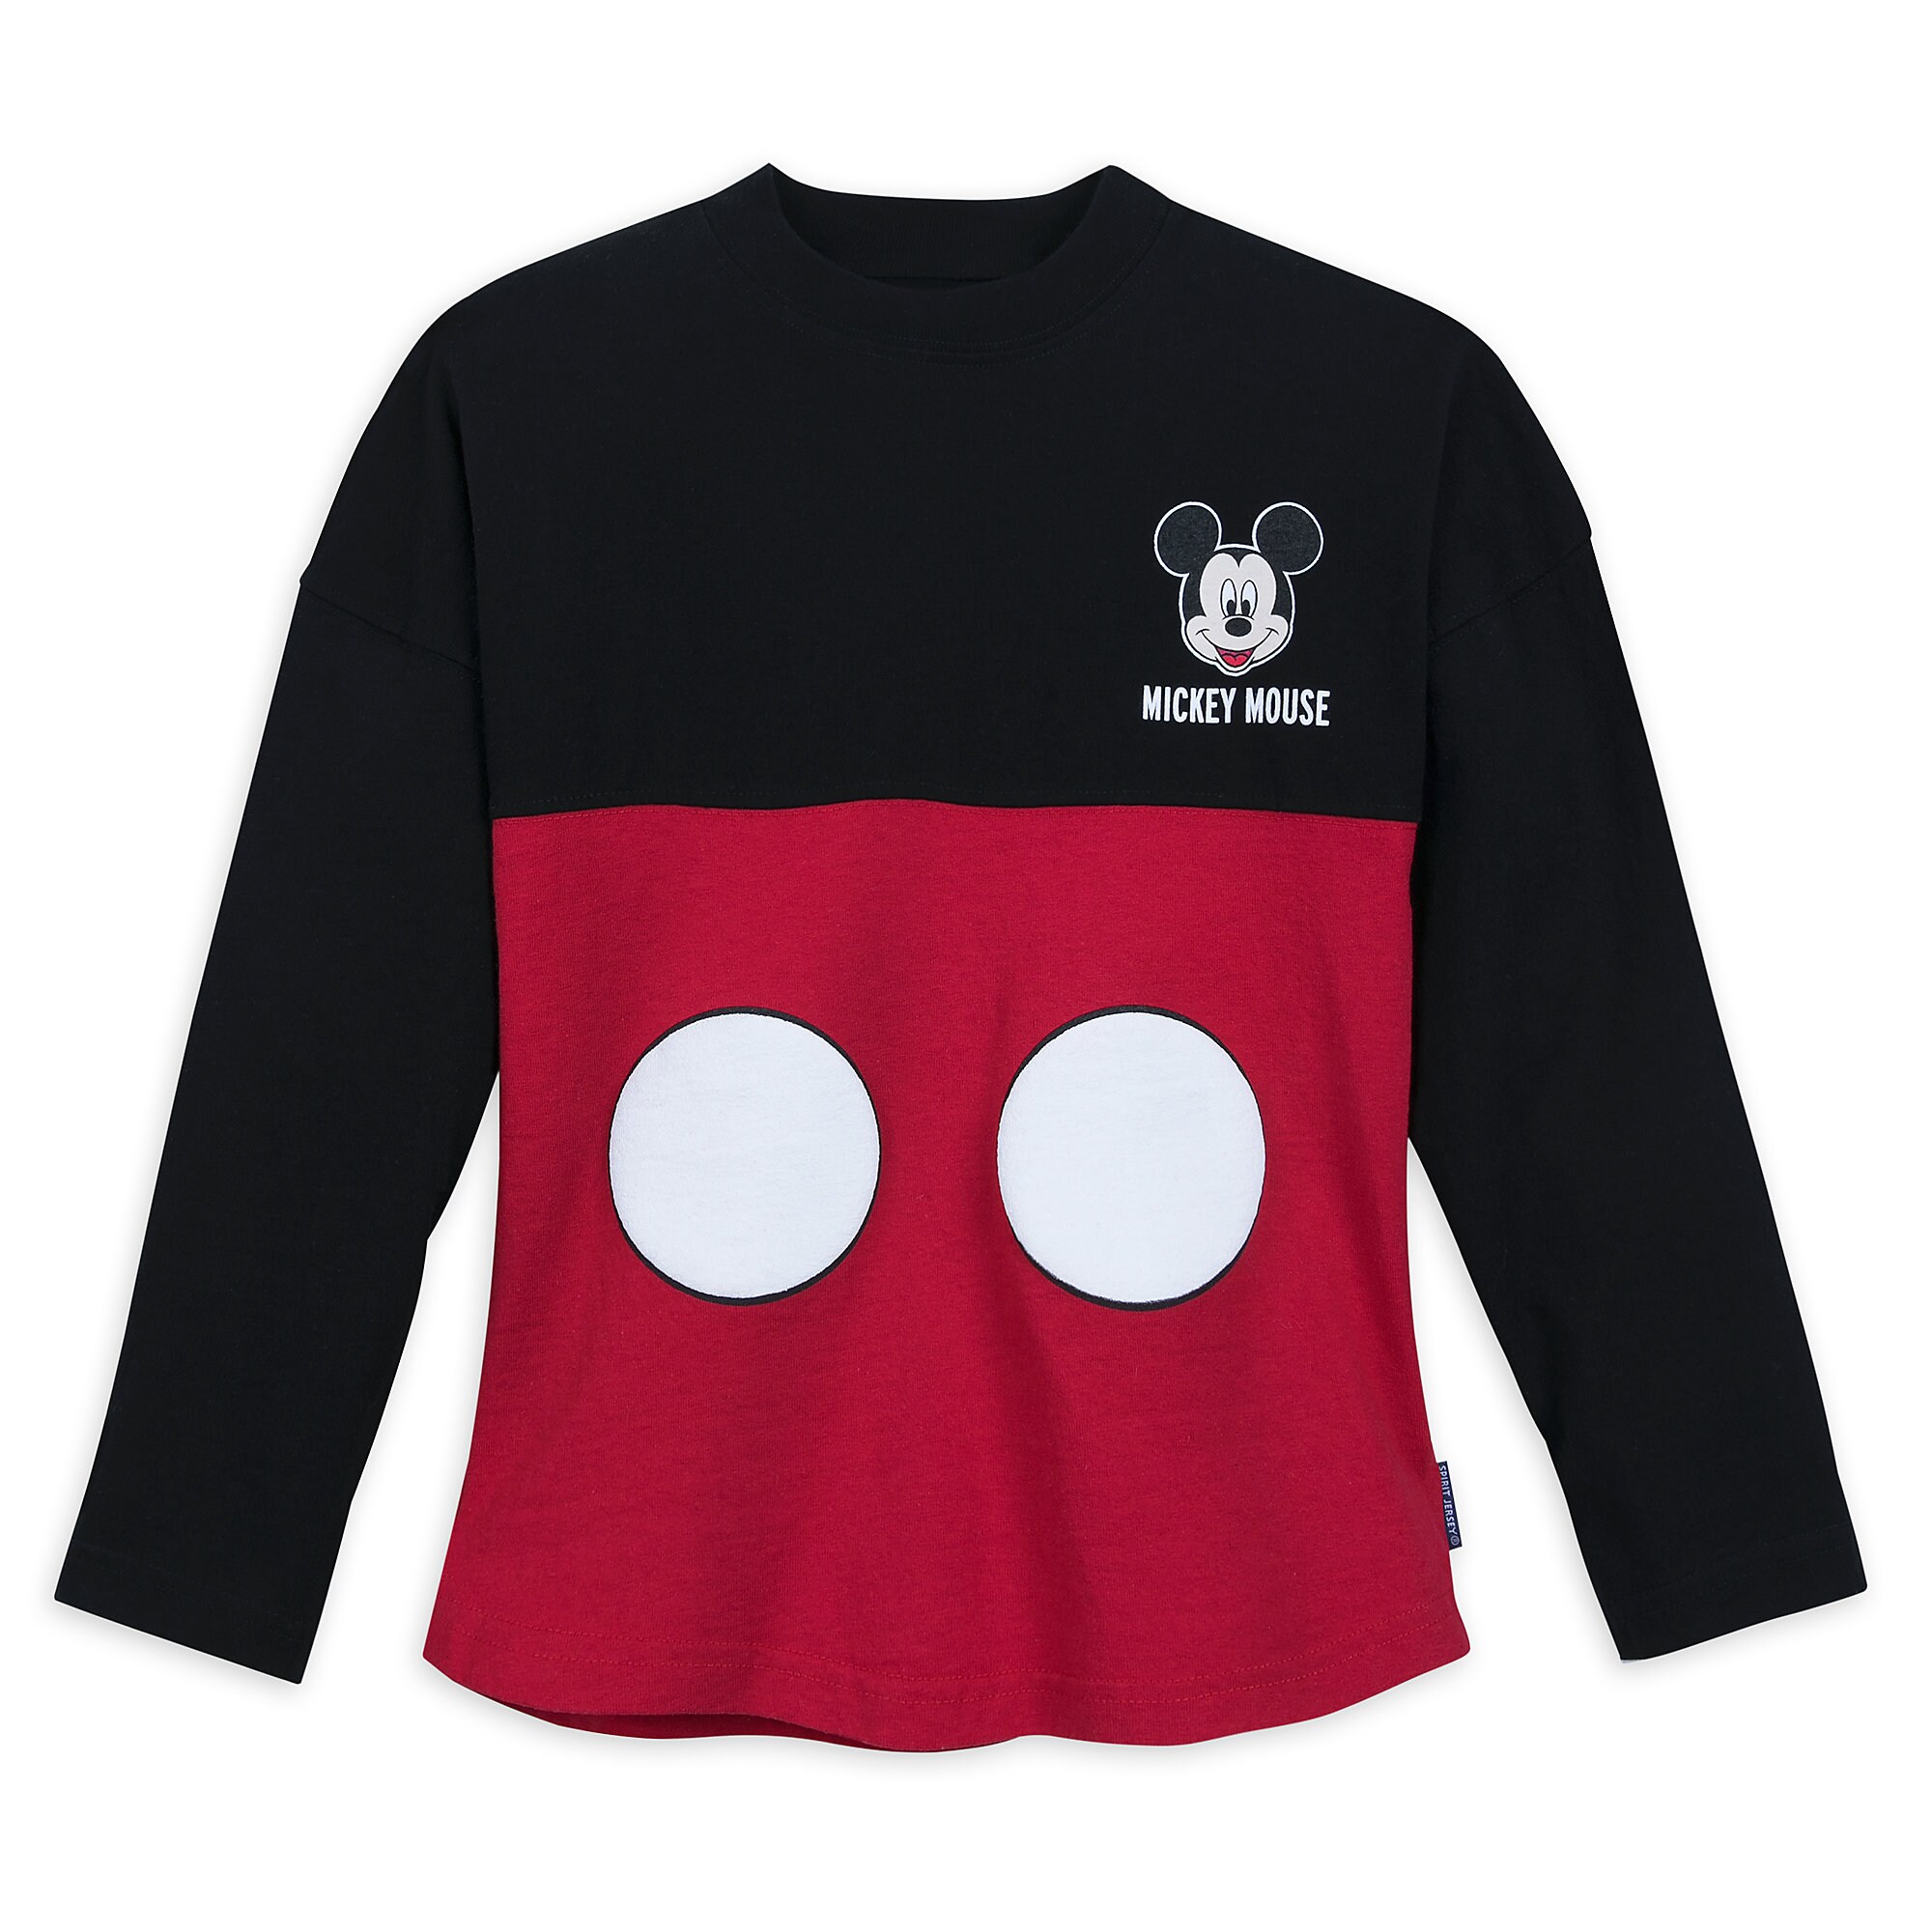 Mickey Mouse Spirit Jersey for Kids - Walt Disney World